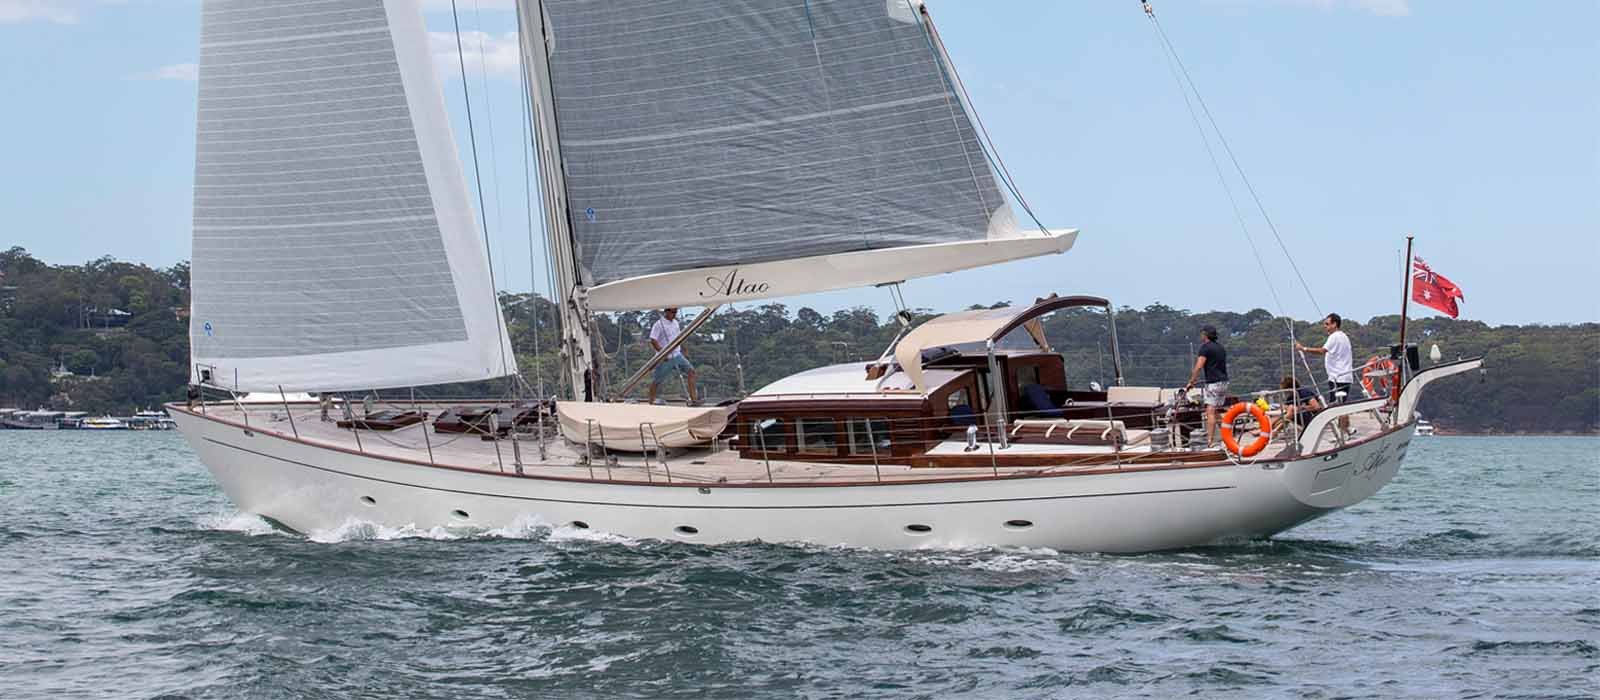 Atao Luxury Boat Hire cruising Sydney Harbour